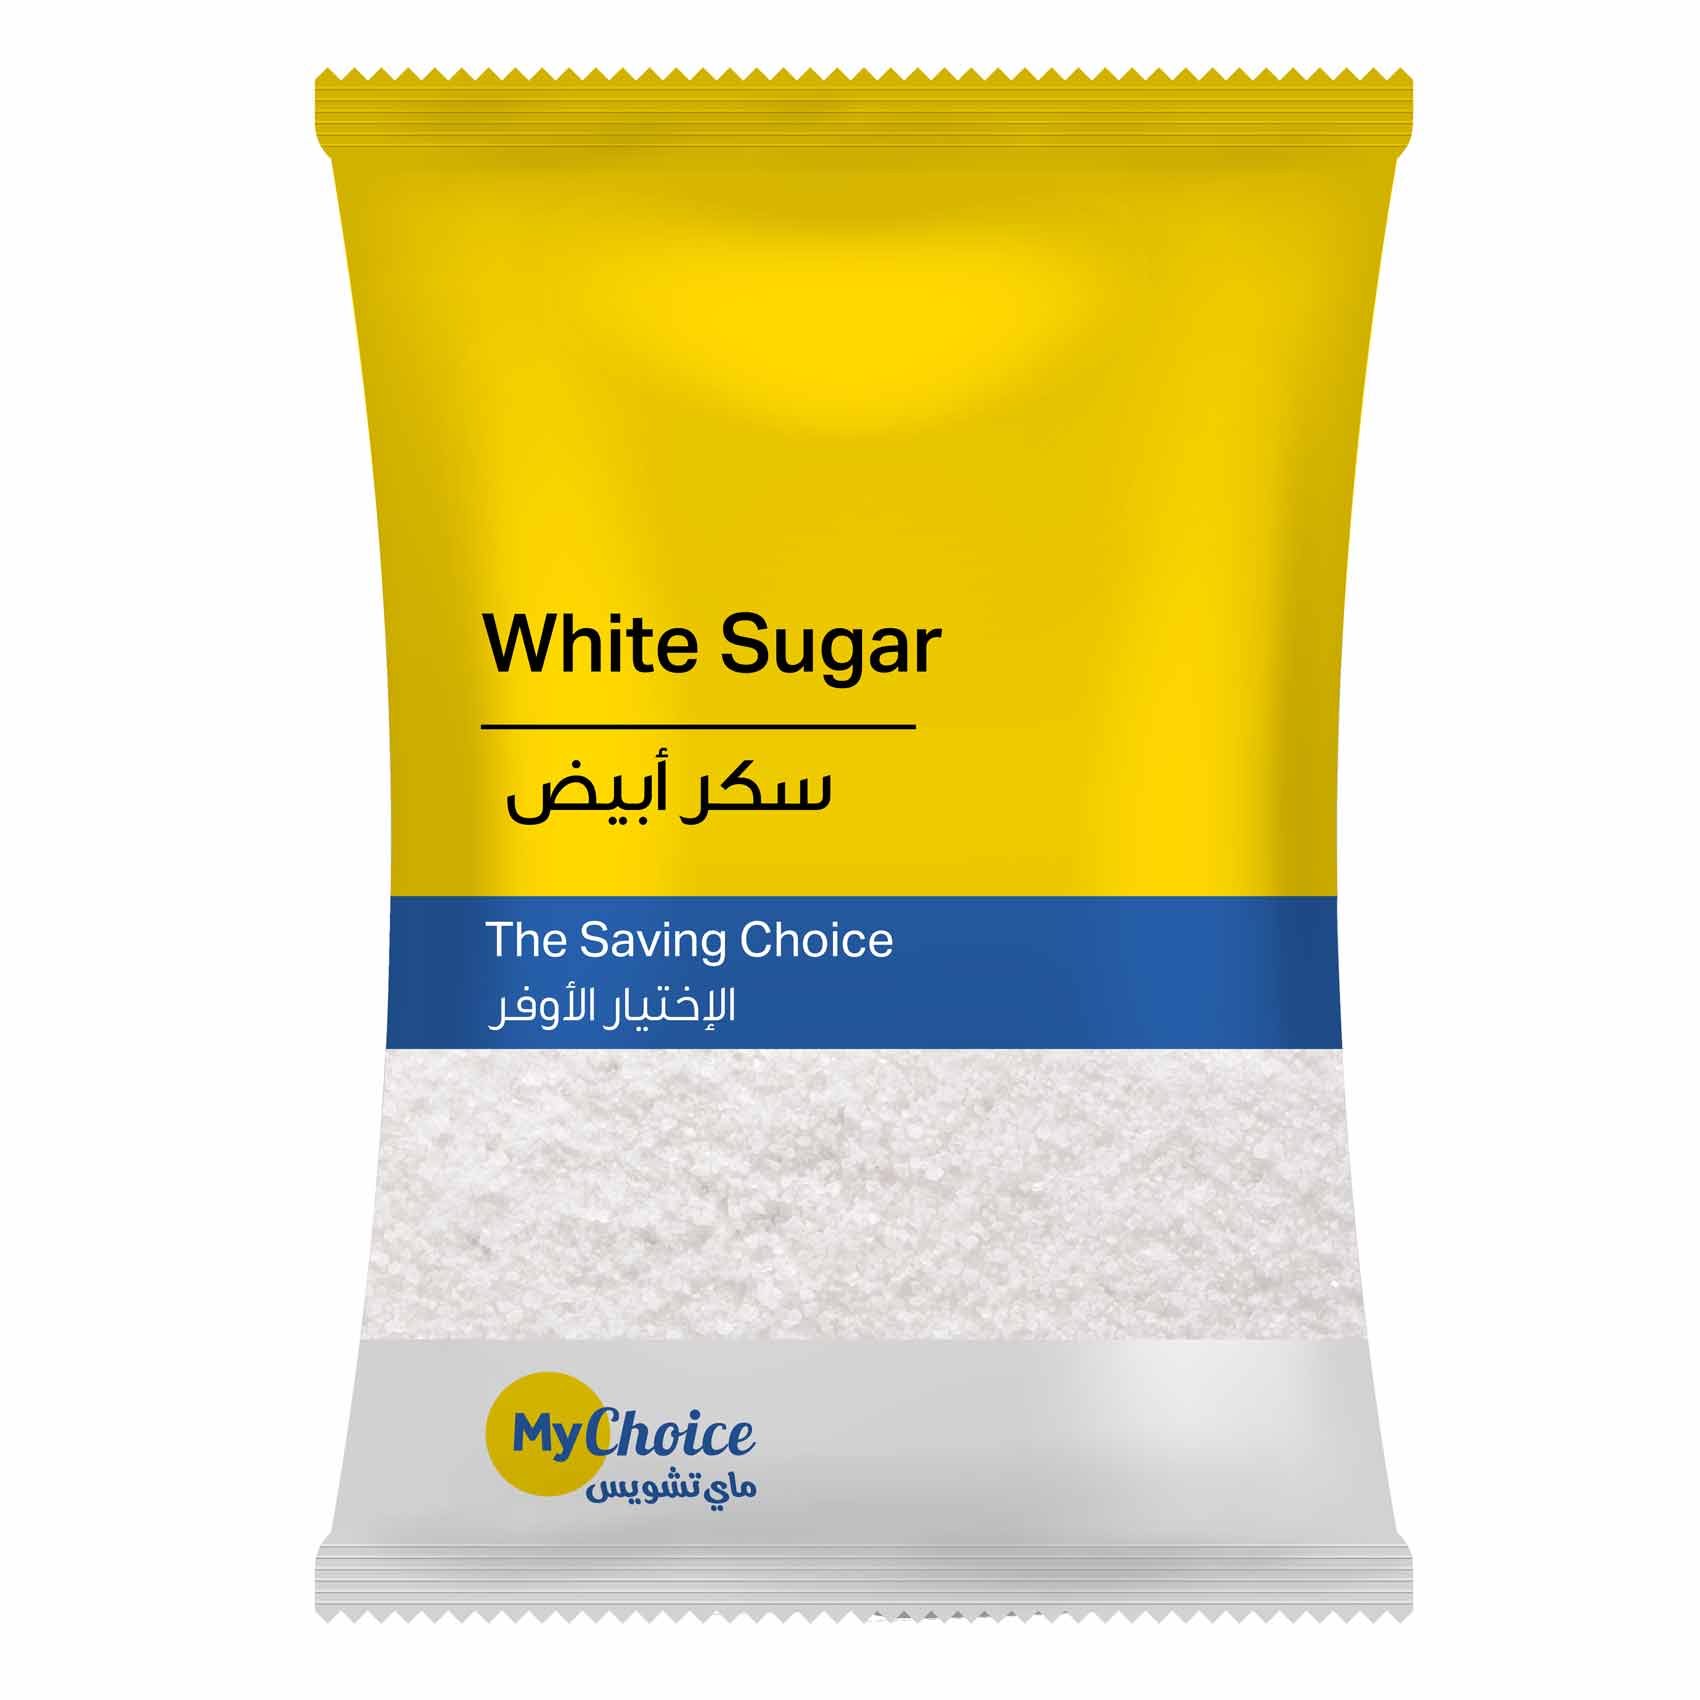 MyChoice White Sugar 908GR